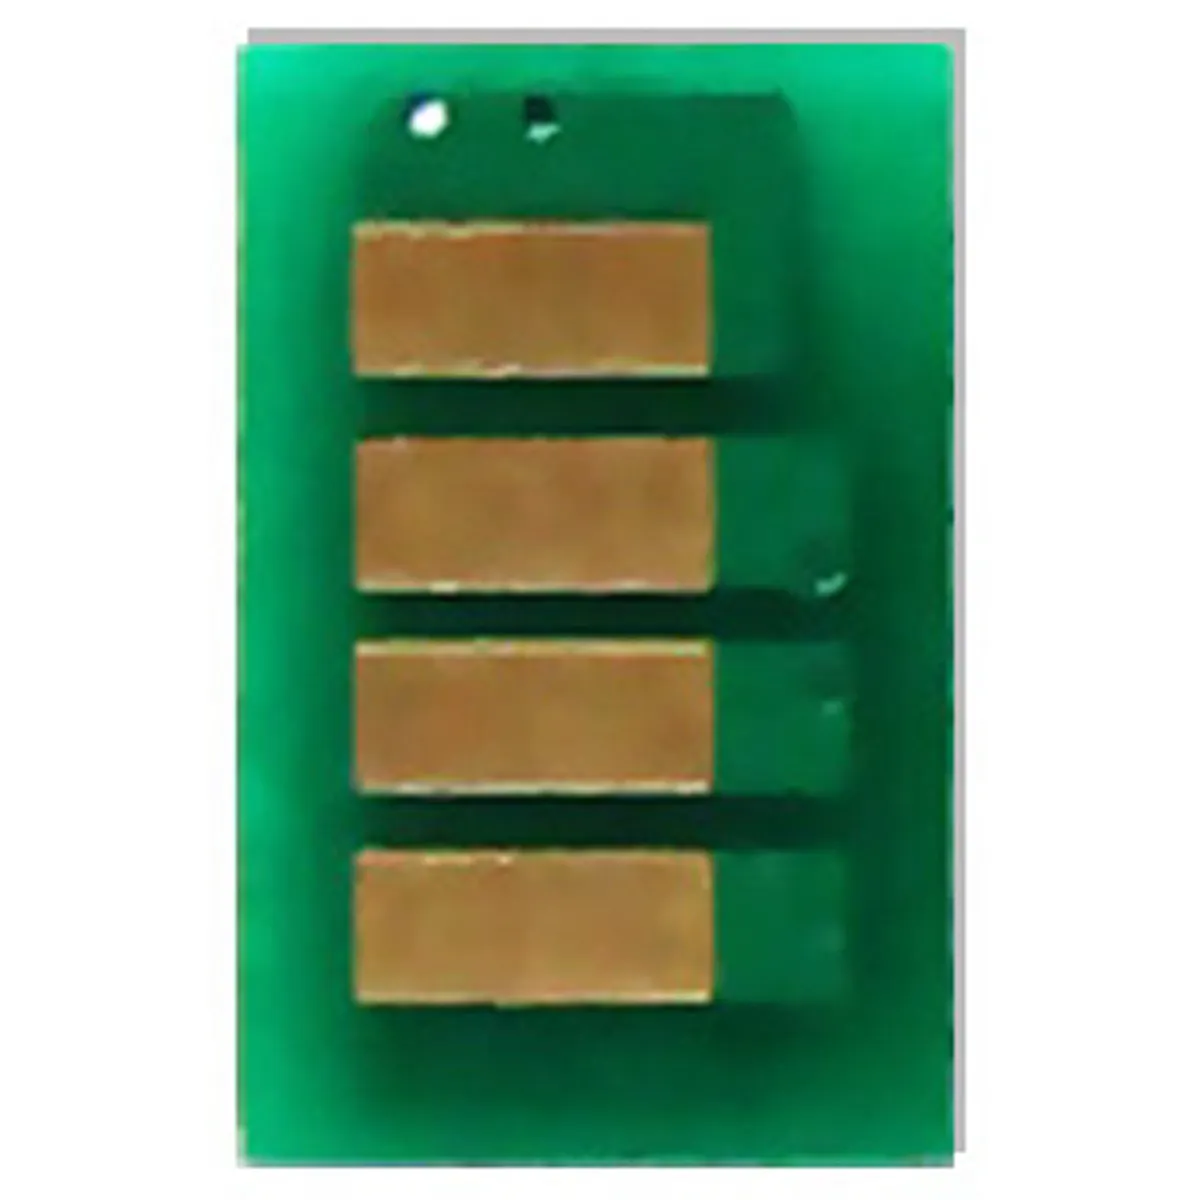 Chips cartucho de tóner negro para Ricoh Imagio MPC 6000 SP chip cartucho de impresora chips láser